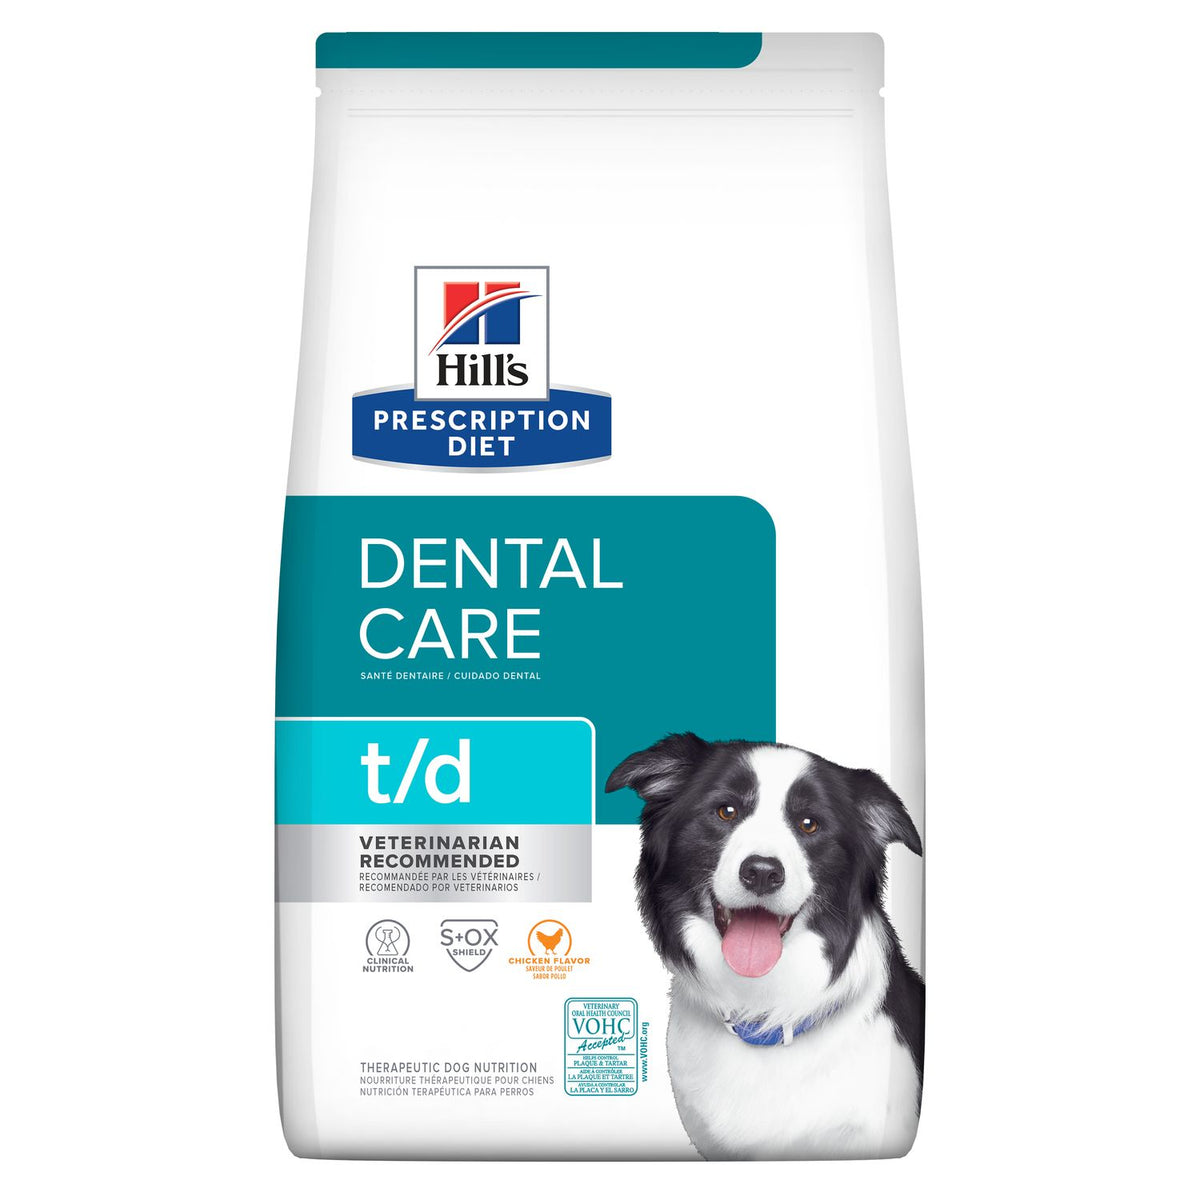 Hills Prescription Diet t/d Dental Care Dog